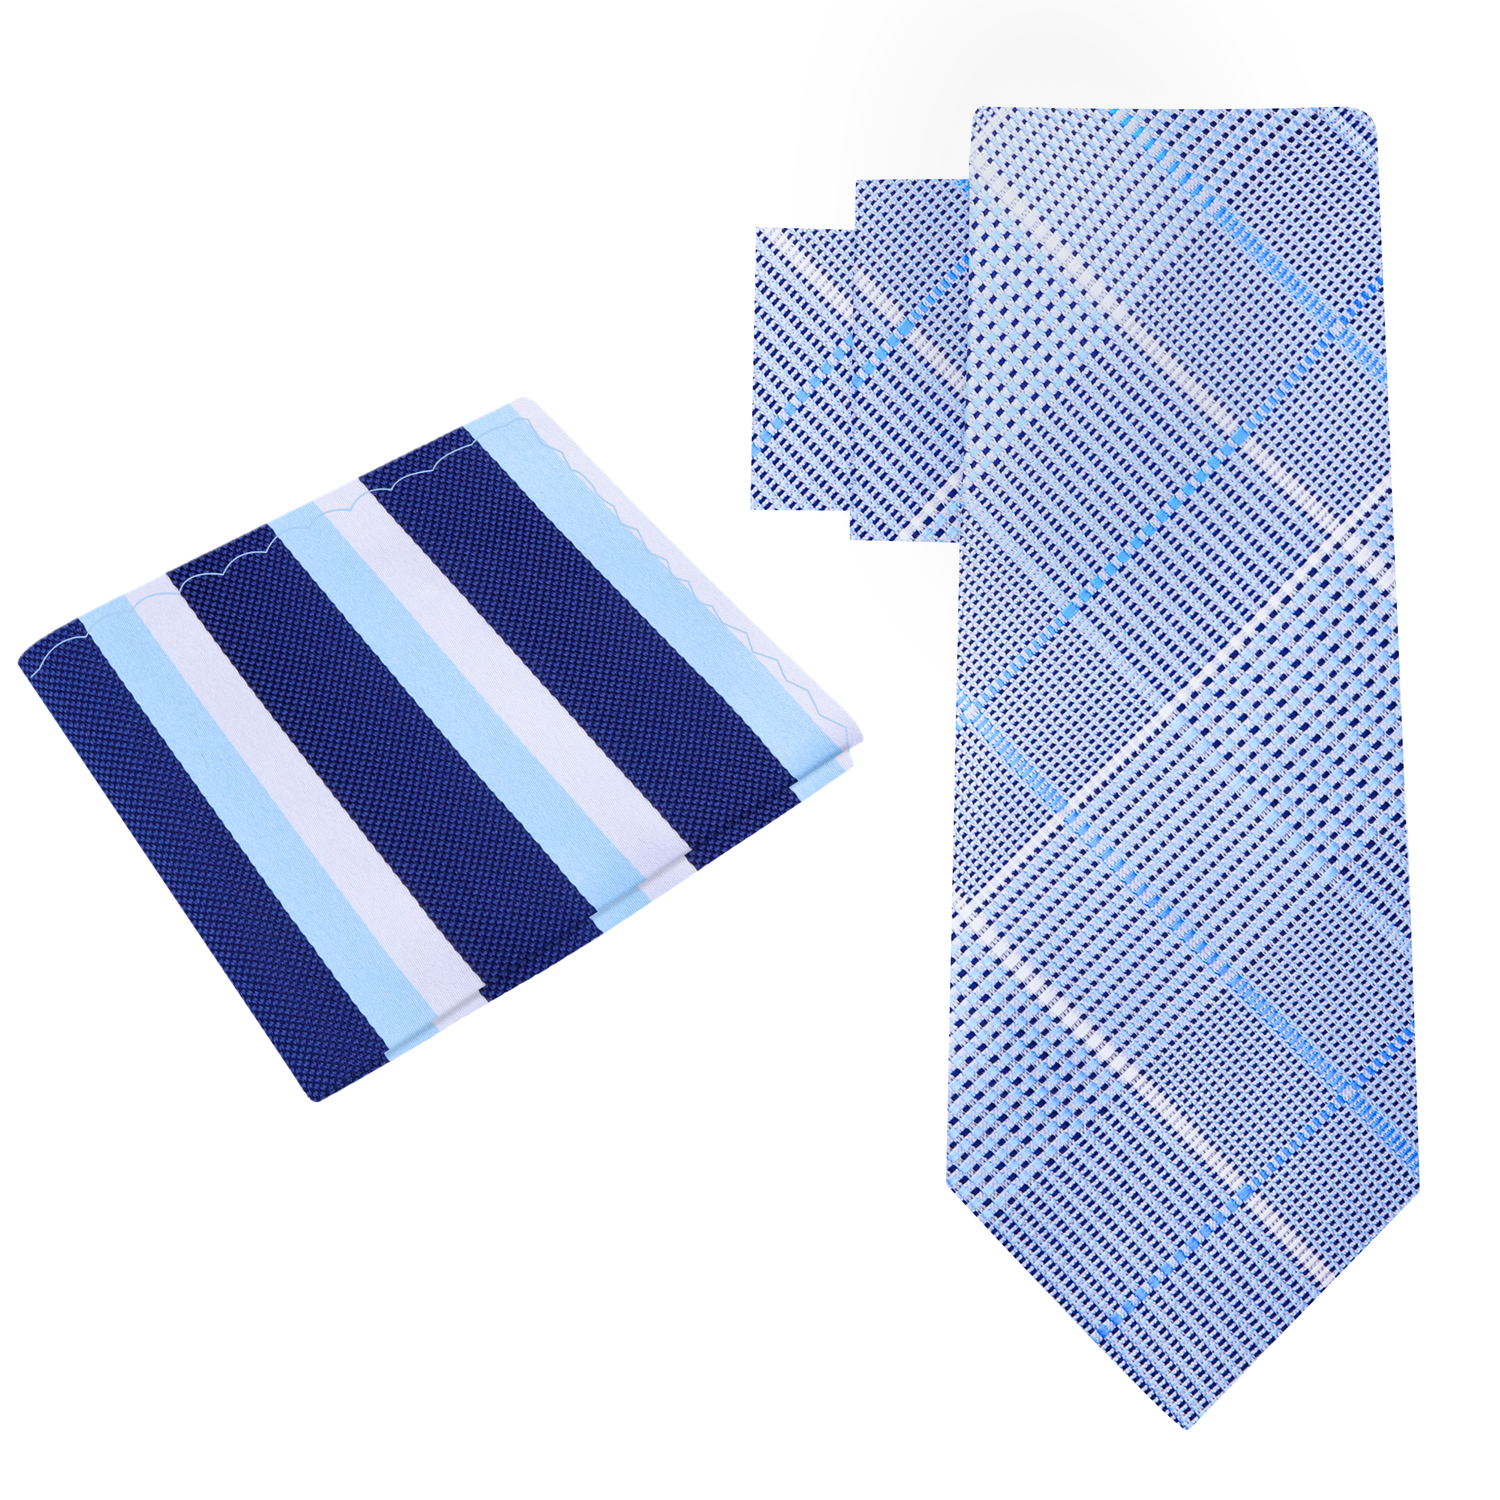 Alt View: Light Blue, White Plaid Tie and Dark Blue, Light Blue and White Stripe Square